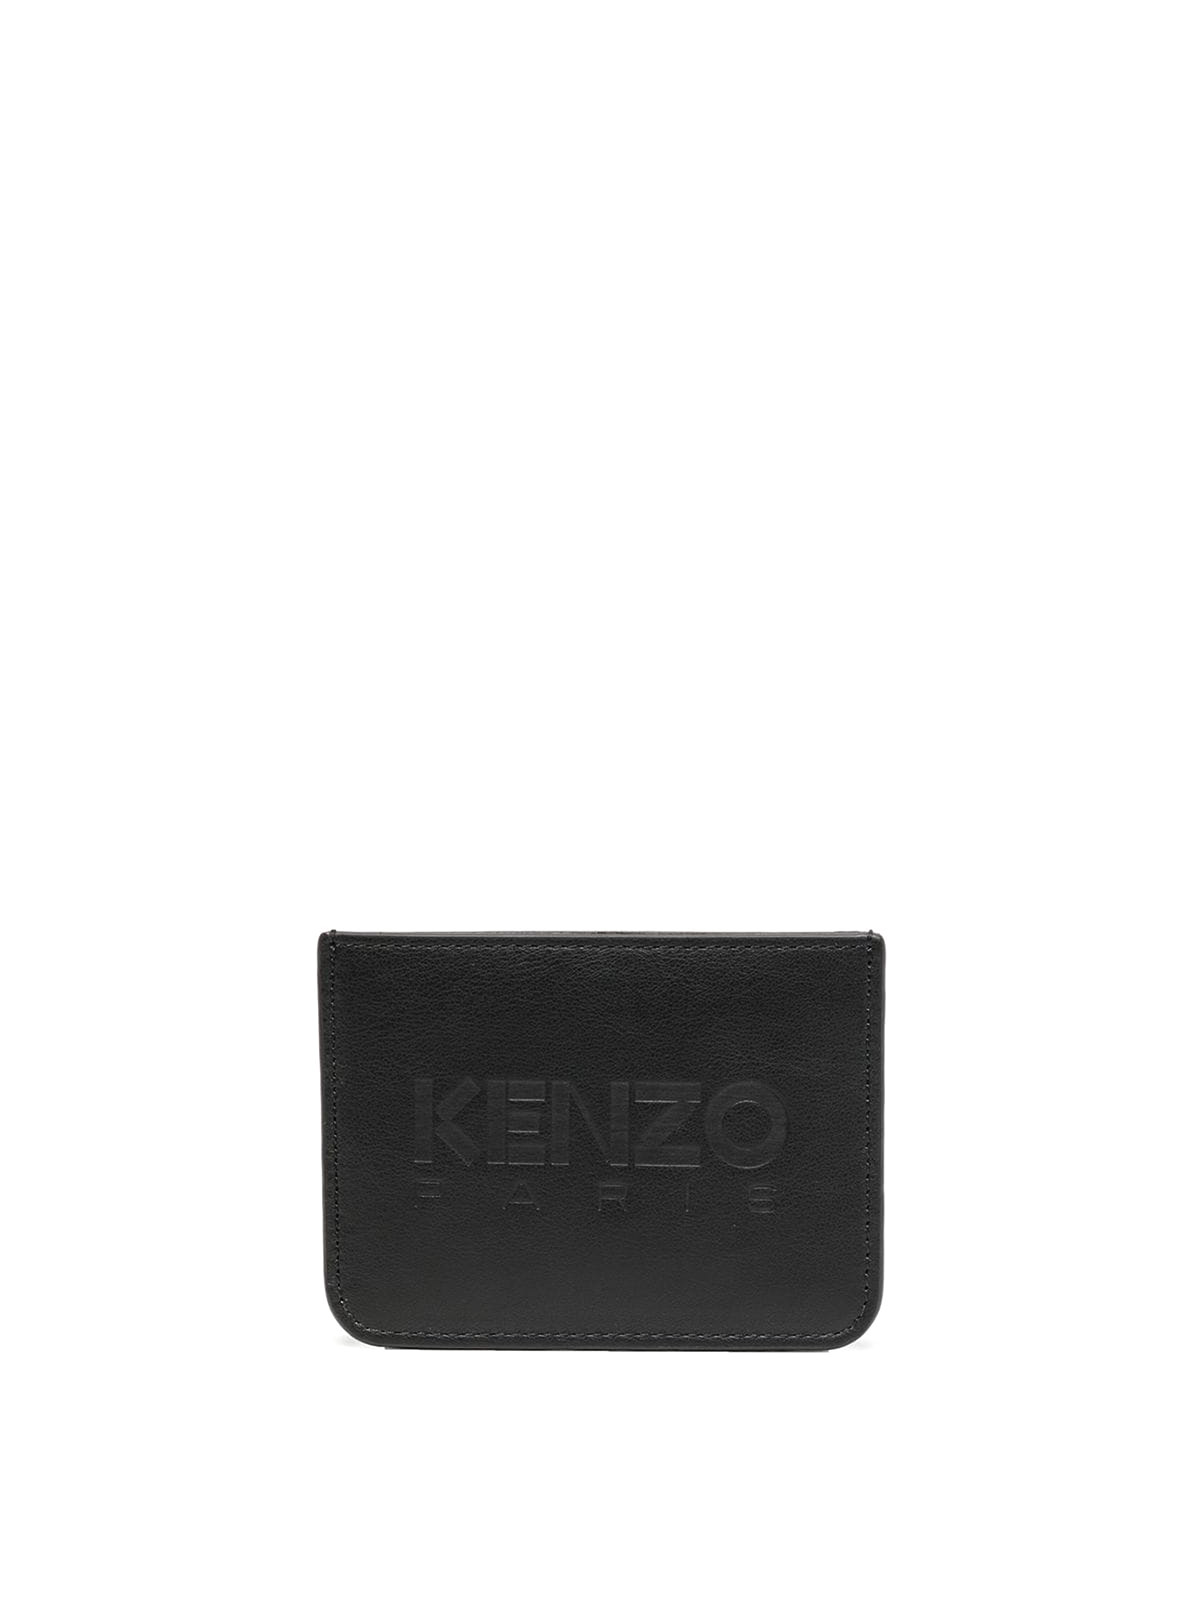 Kenzo Paris Card Holder In Black